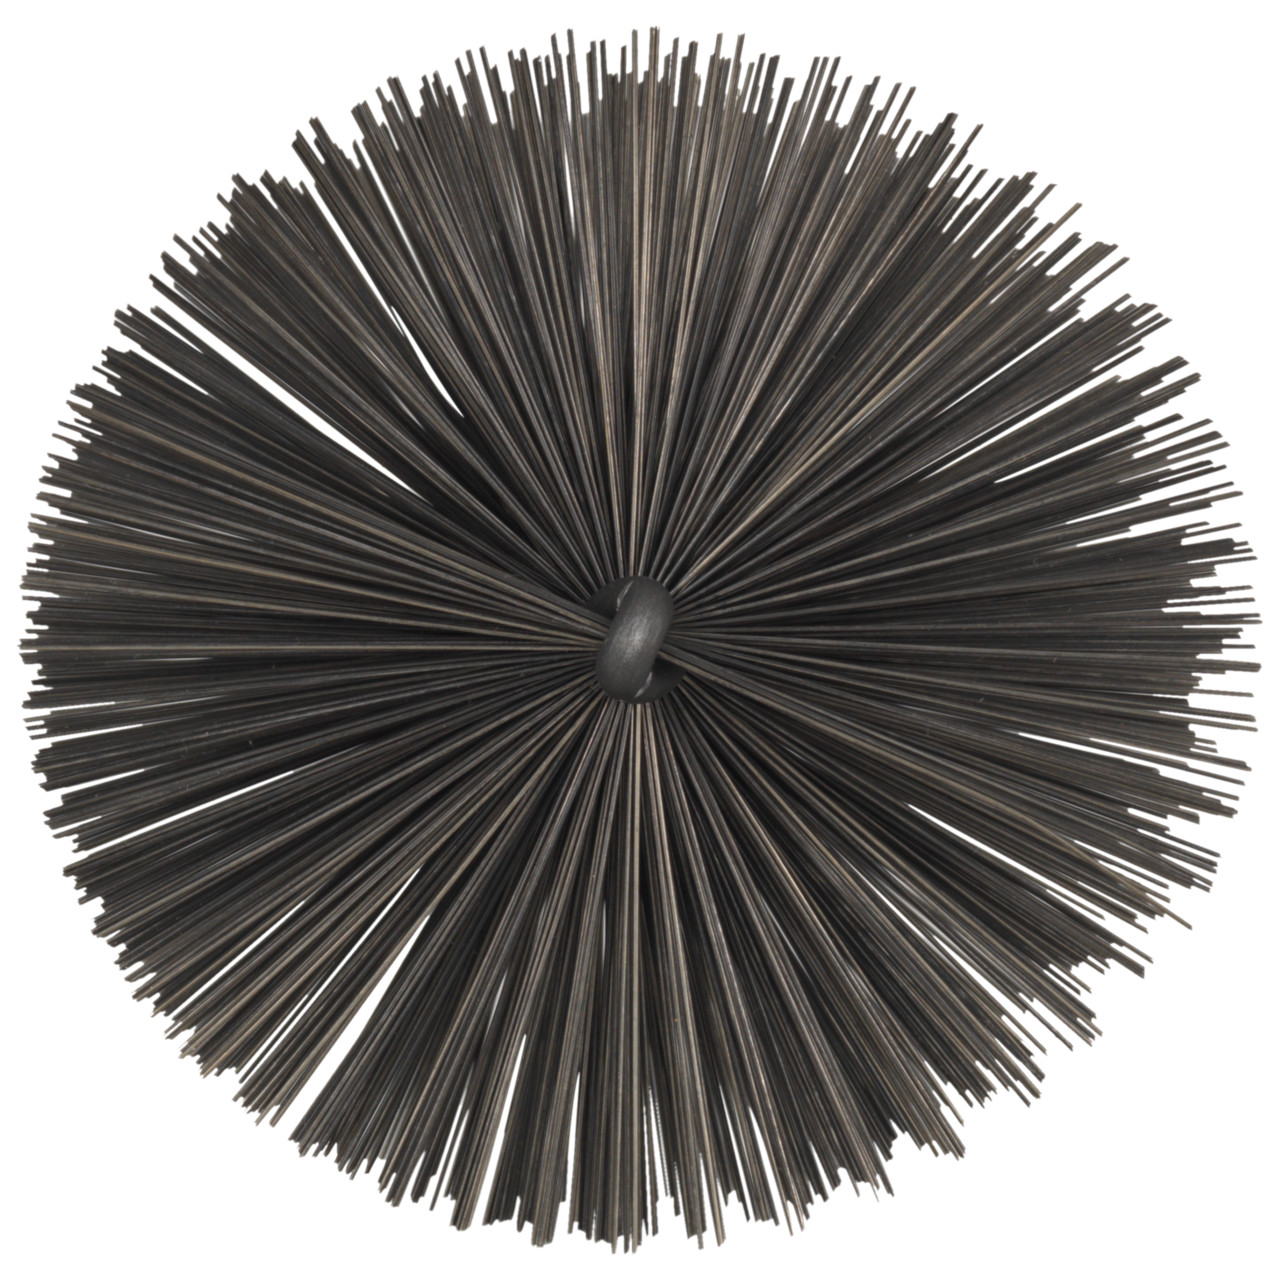 Tyrolit Buisborstel met buitendraad DxGE-I 25xB1/2-150 Voor staal, vorm: 18ROGDG - (buisborstel), Art. 34203601